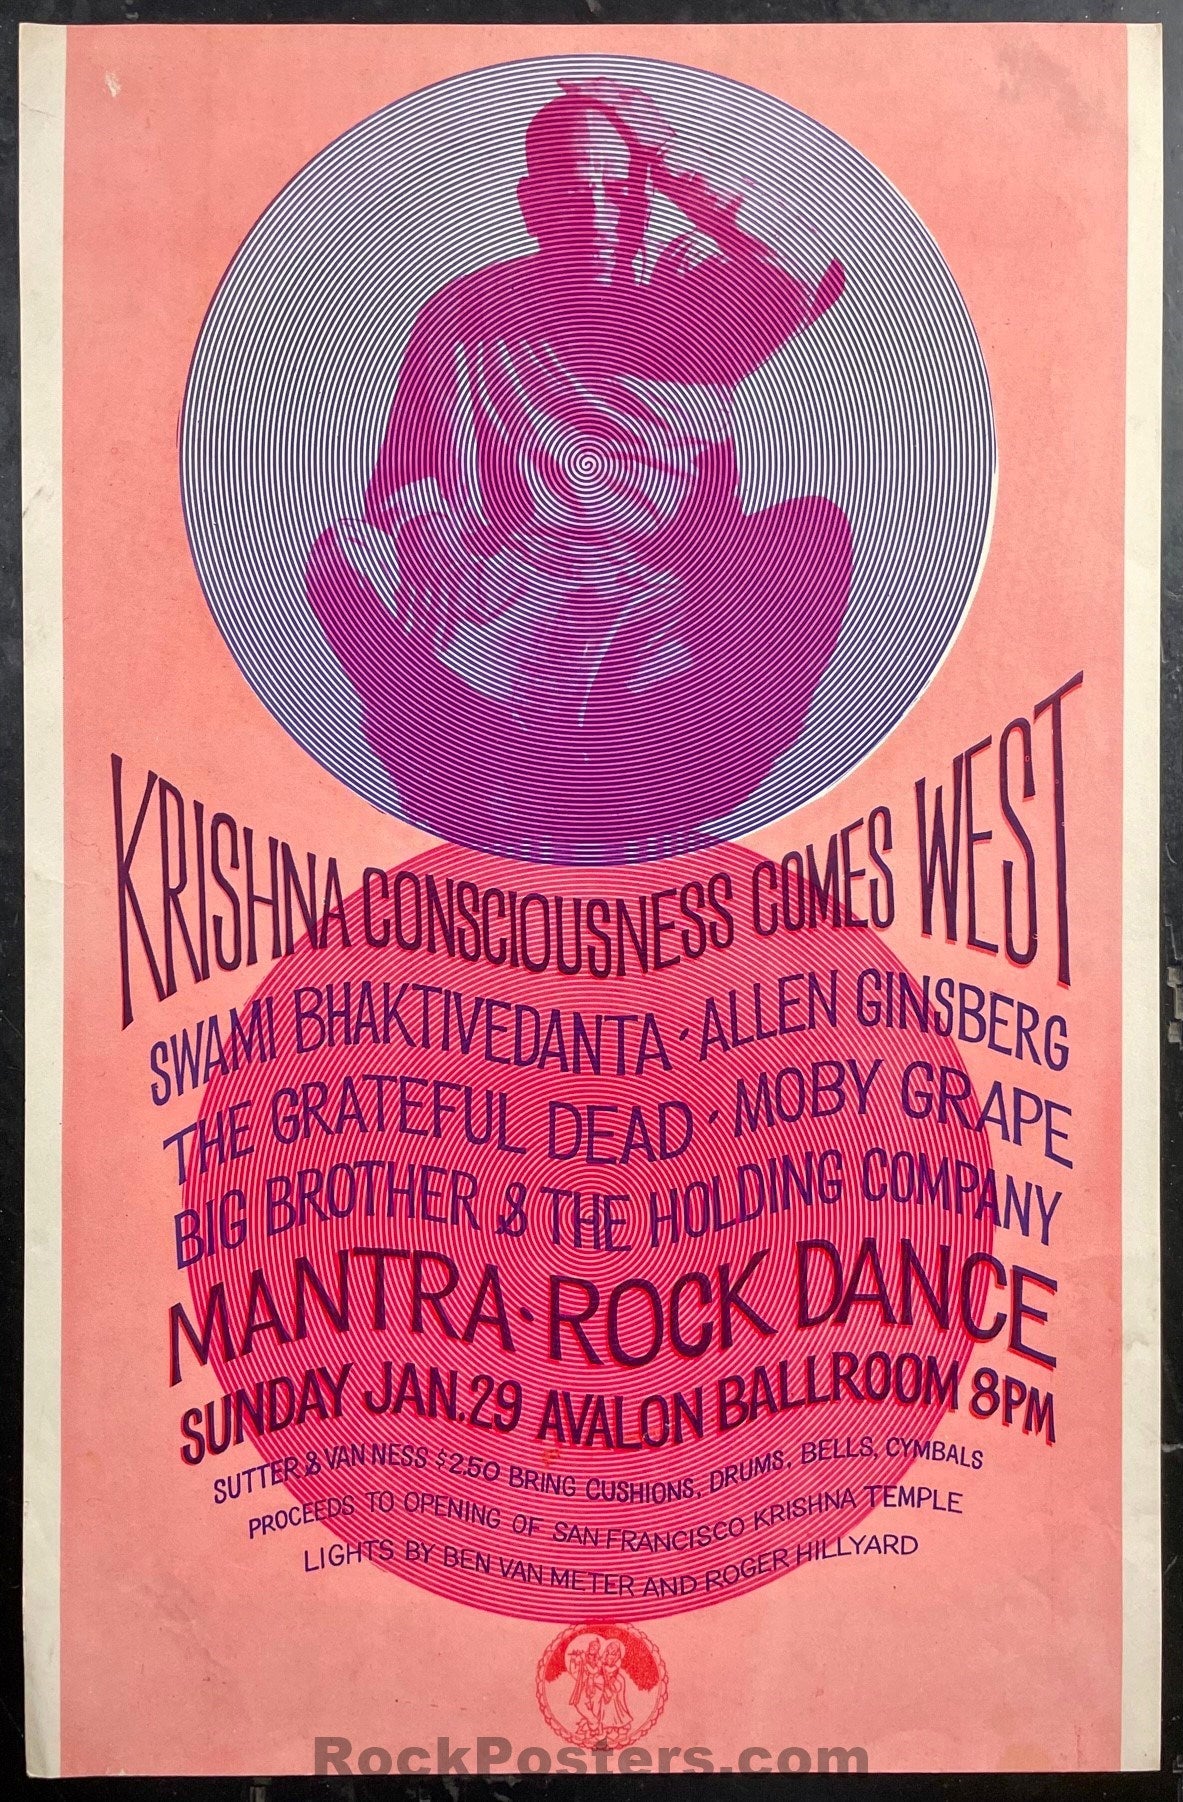 AUCTION - AOR 2.18 - Grateful Dead Allen Ginsberg - Krishna Consciousness - Avalon Ballroom - 1967  Poster - Excellent